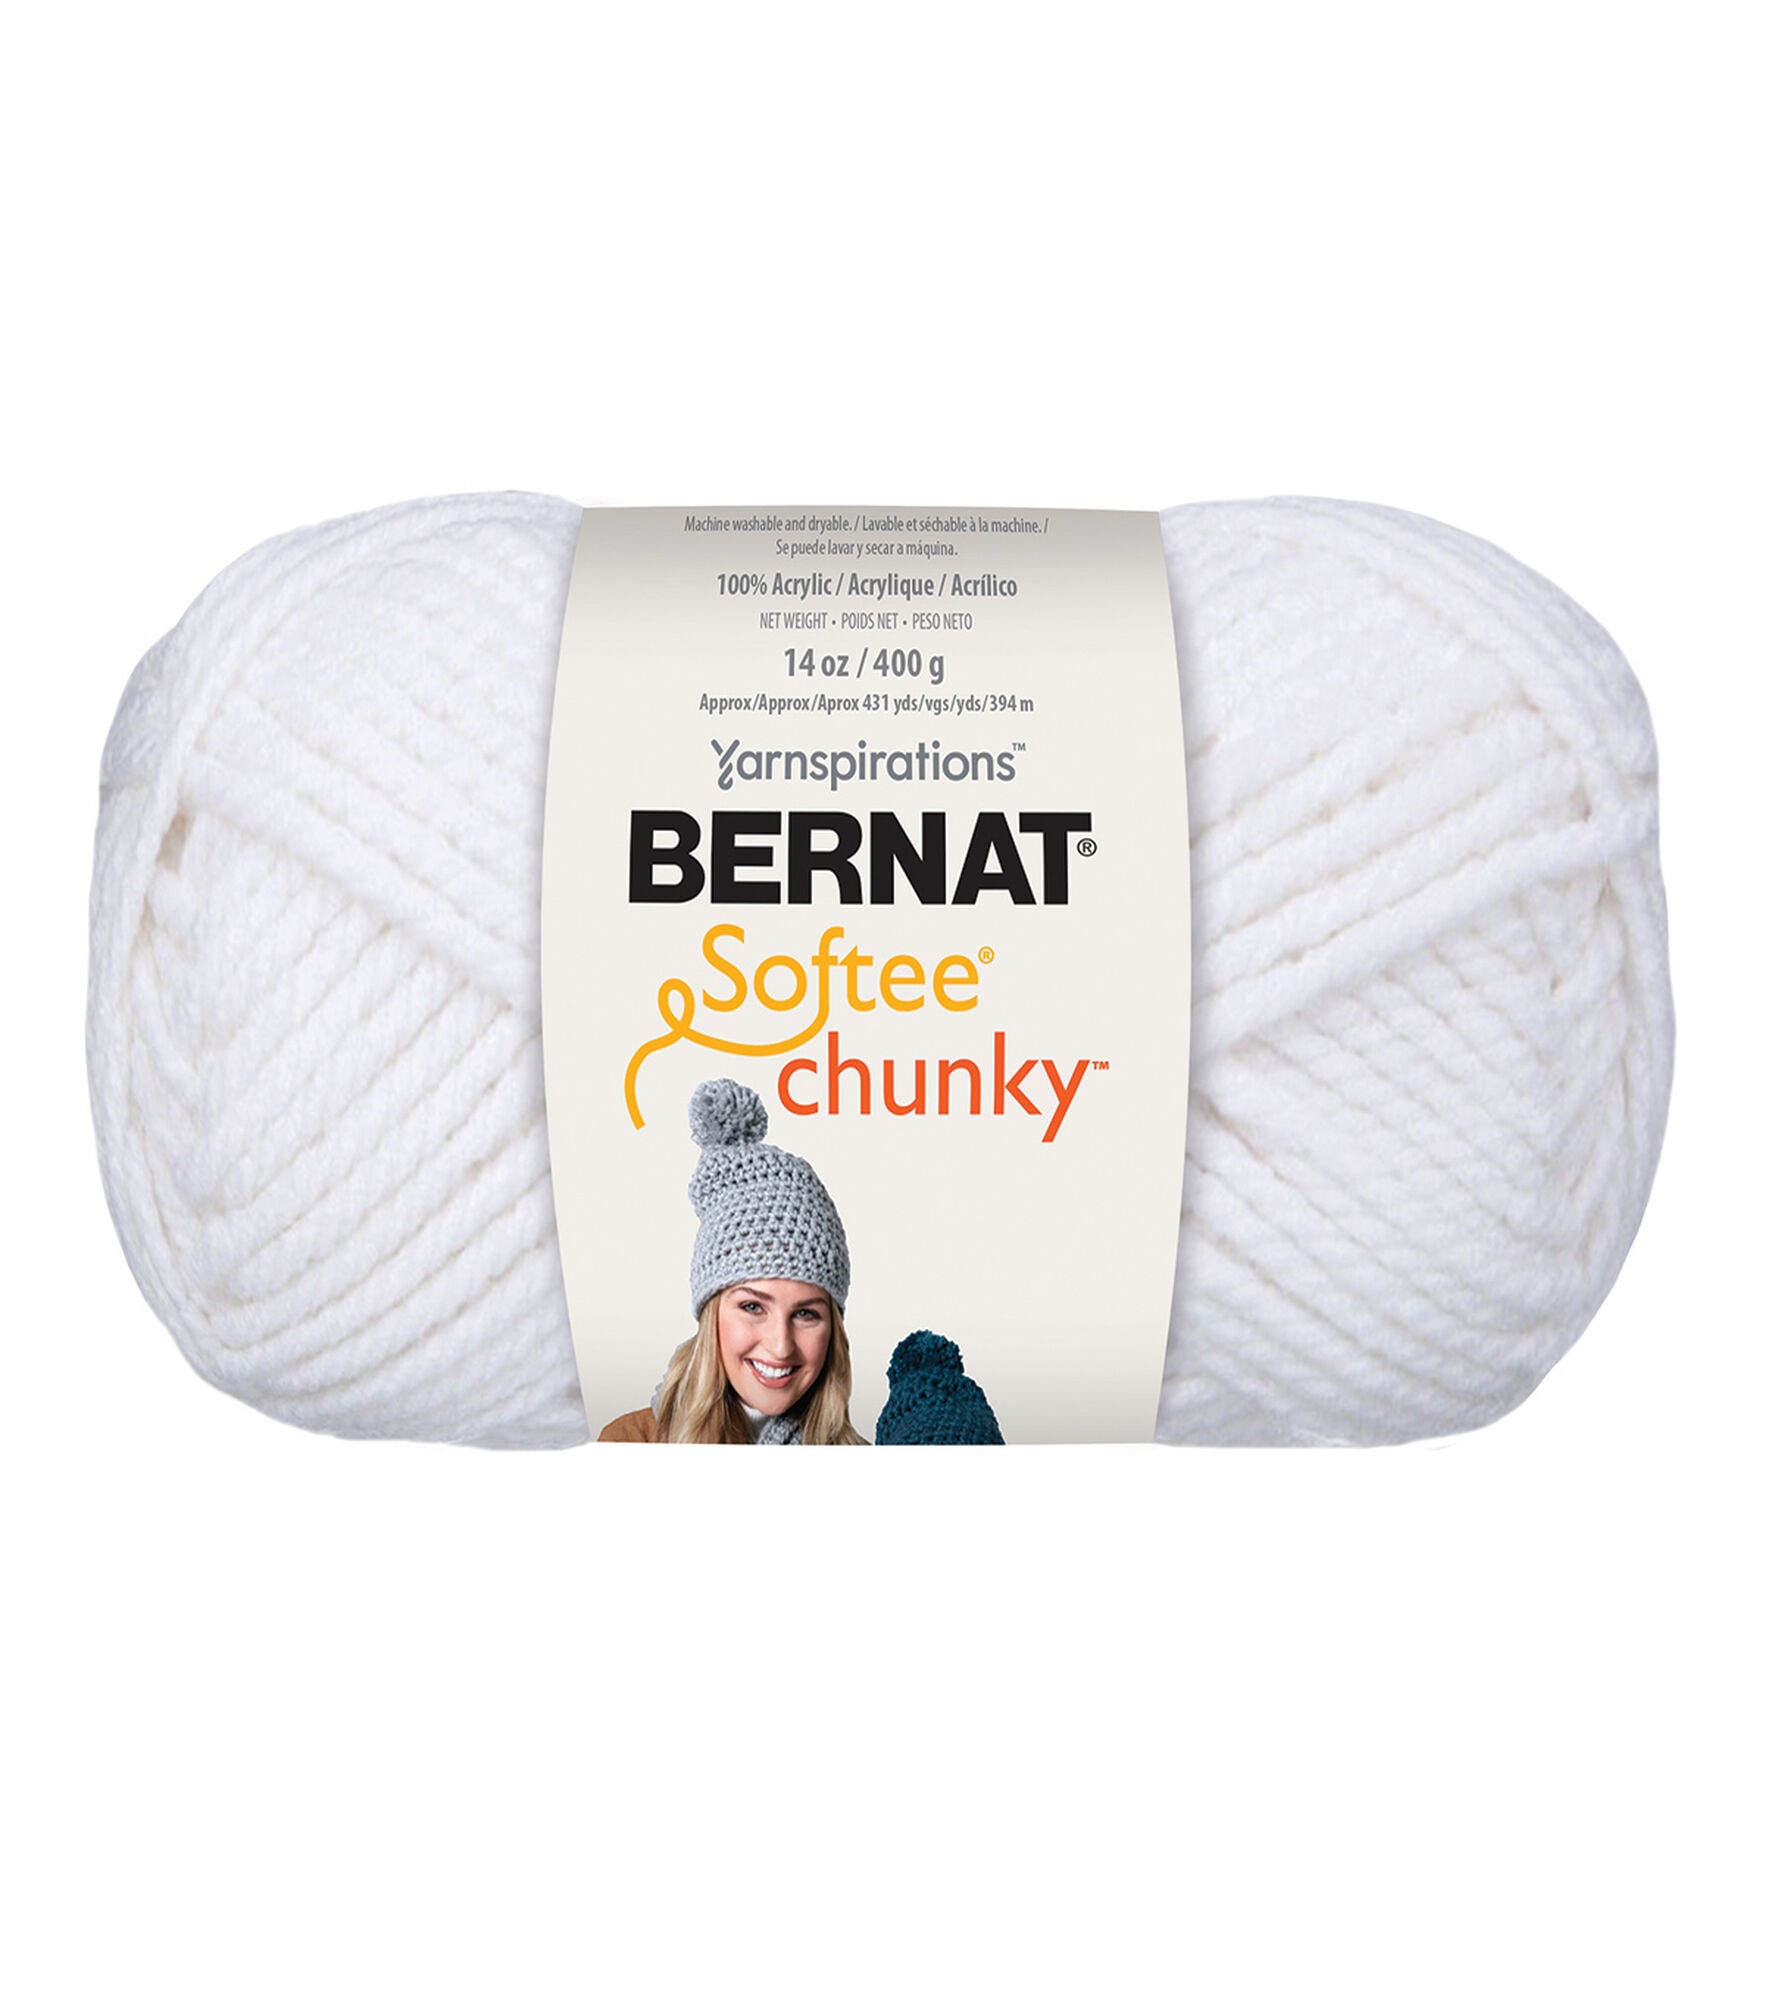 Big Ball Bernat Blanket Yarn, JOANN